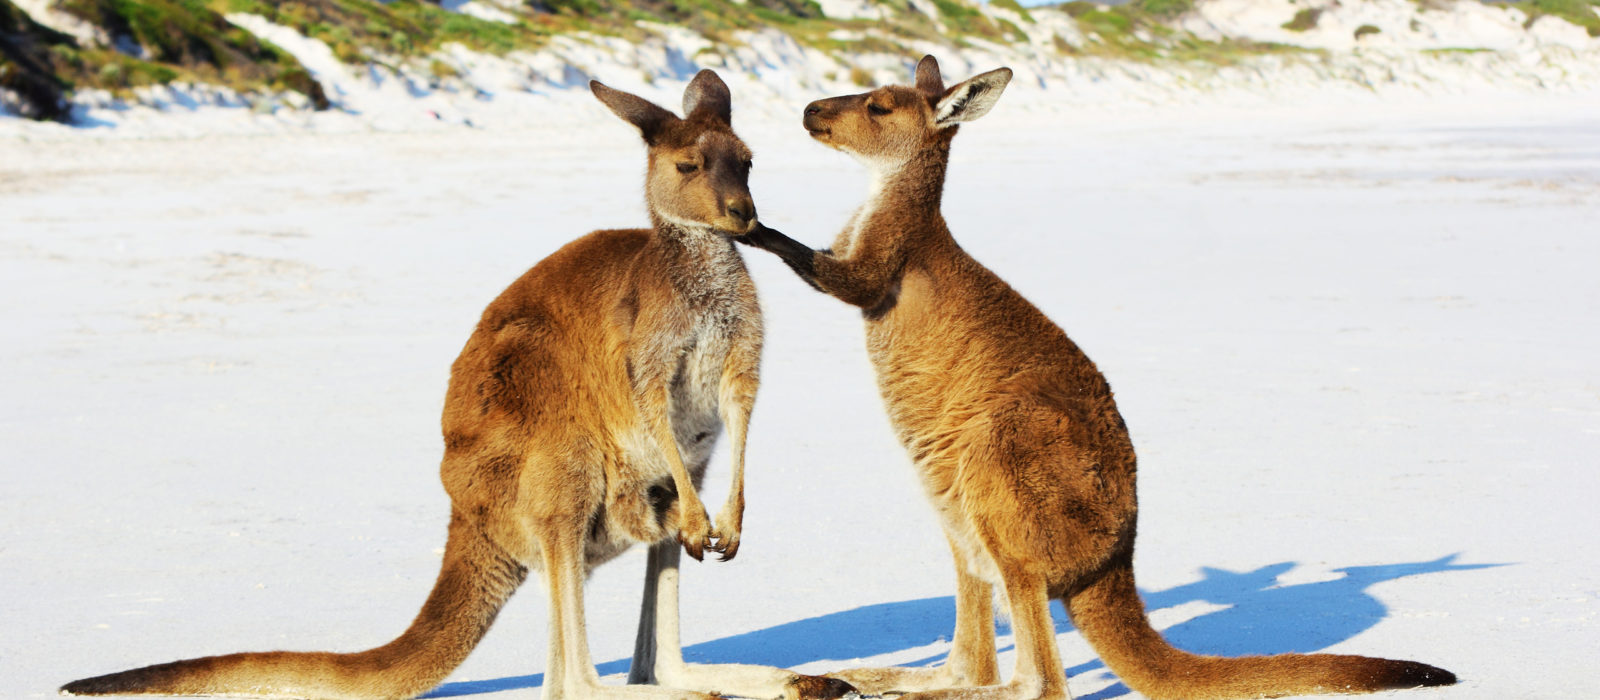 Kangaroo Mother and Young cuddling, Lucky Bay, Australia